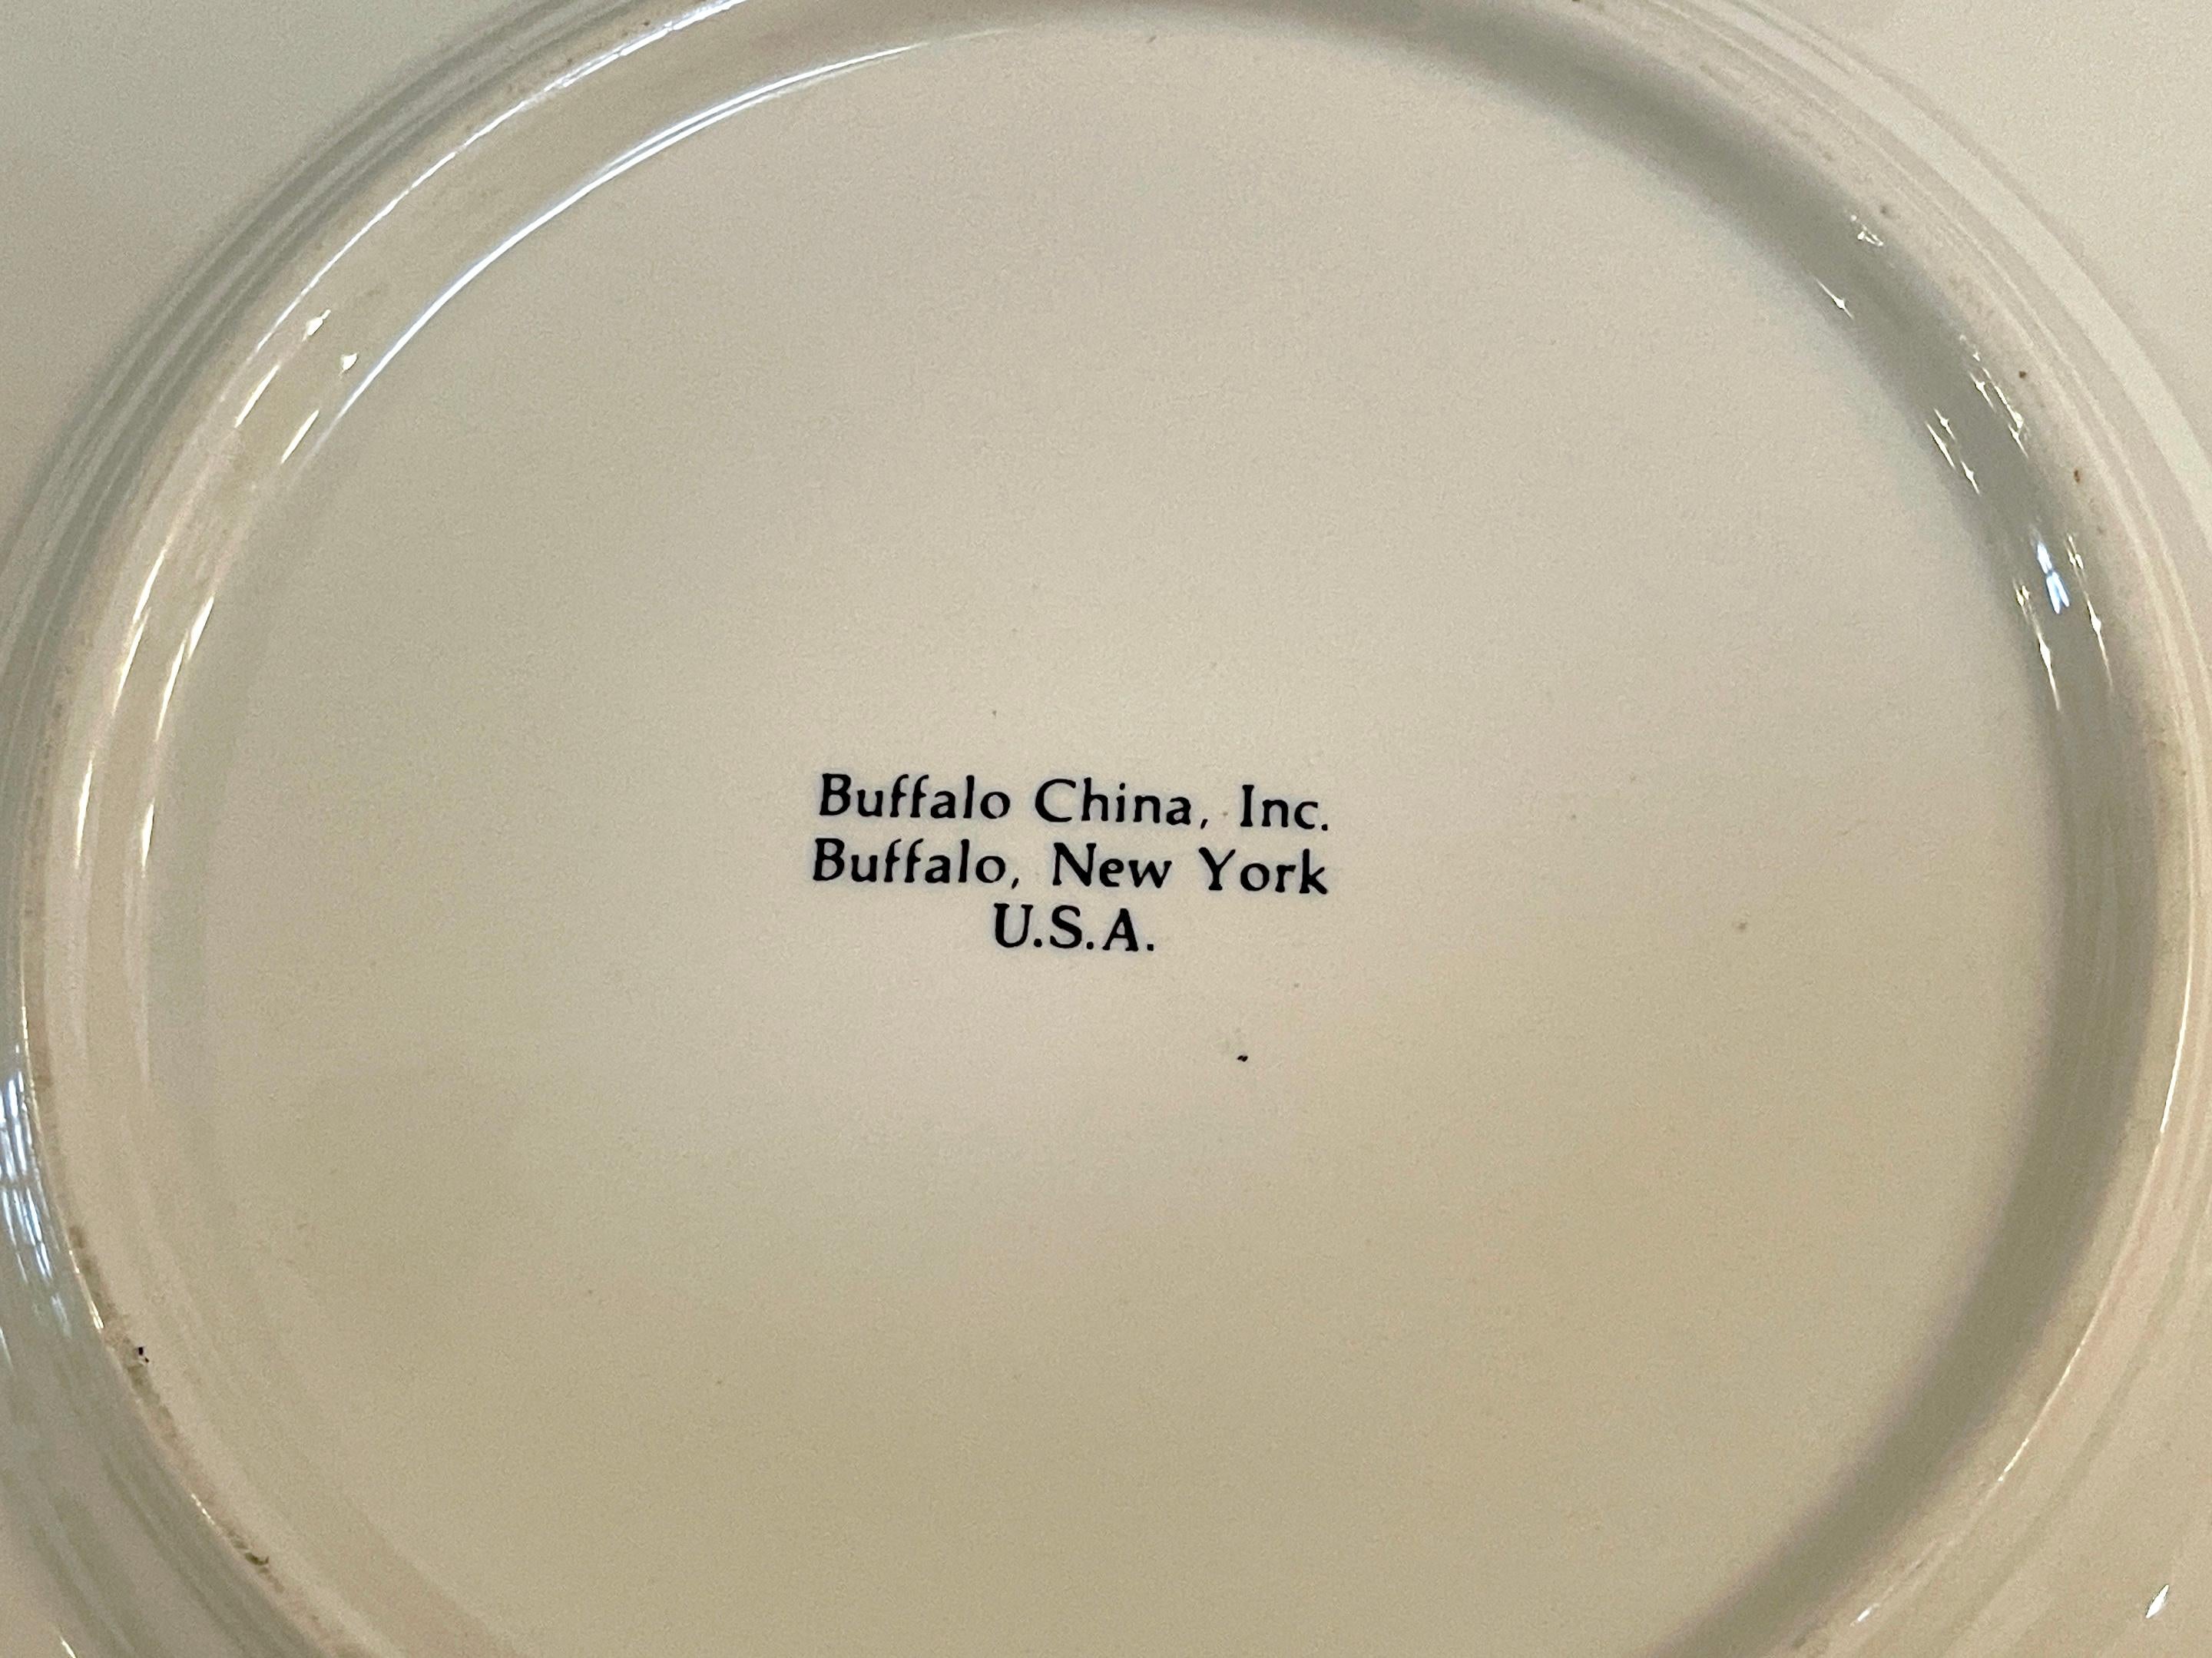 12 Polo Motif Dinner Plates, Buffalo China for Palm Beach Polo Club For Sale 2